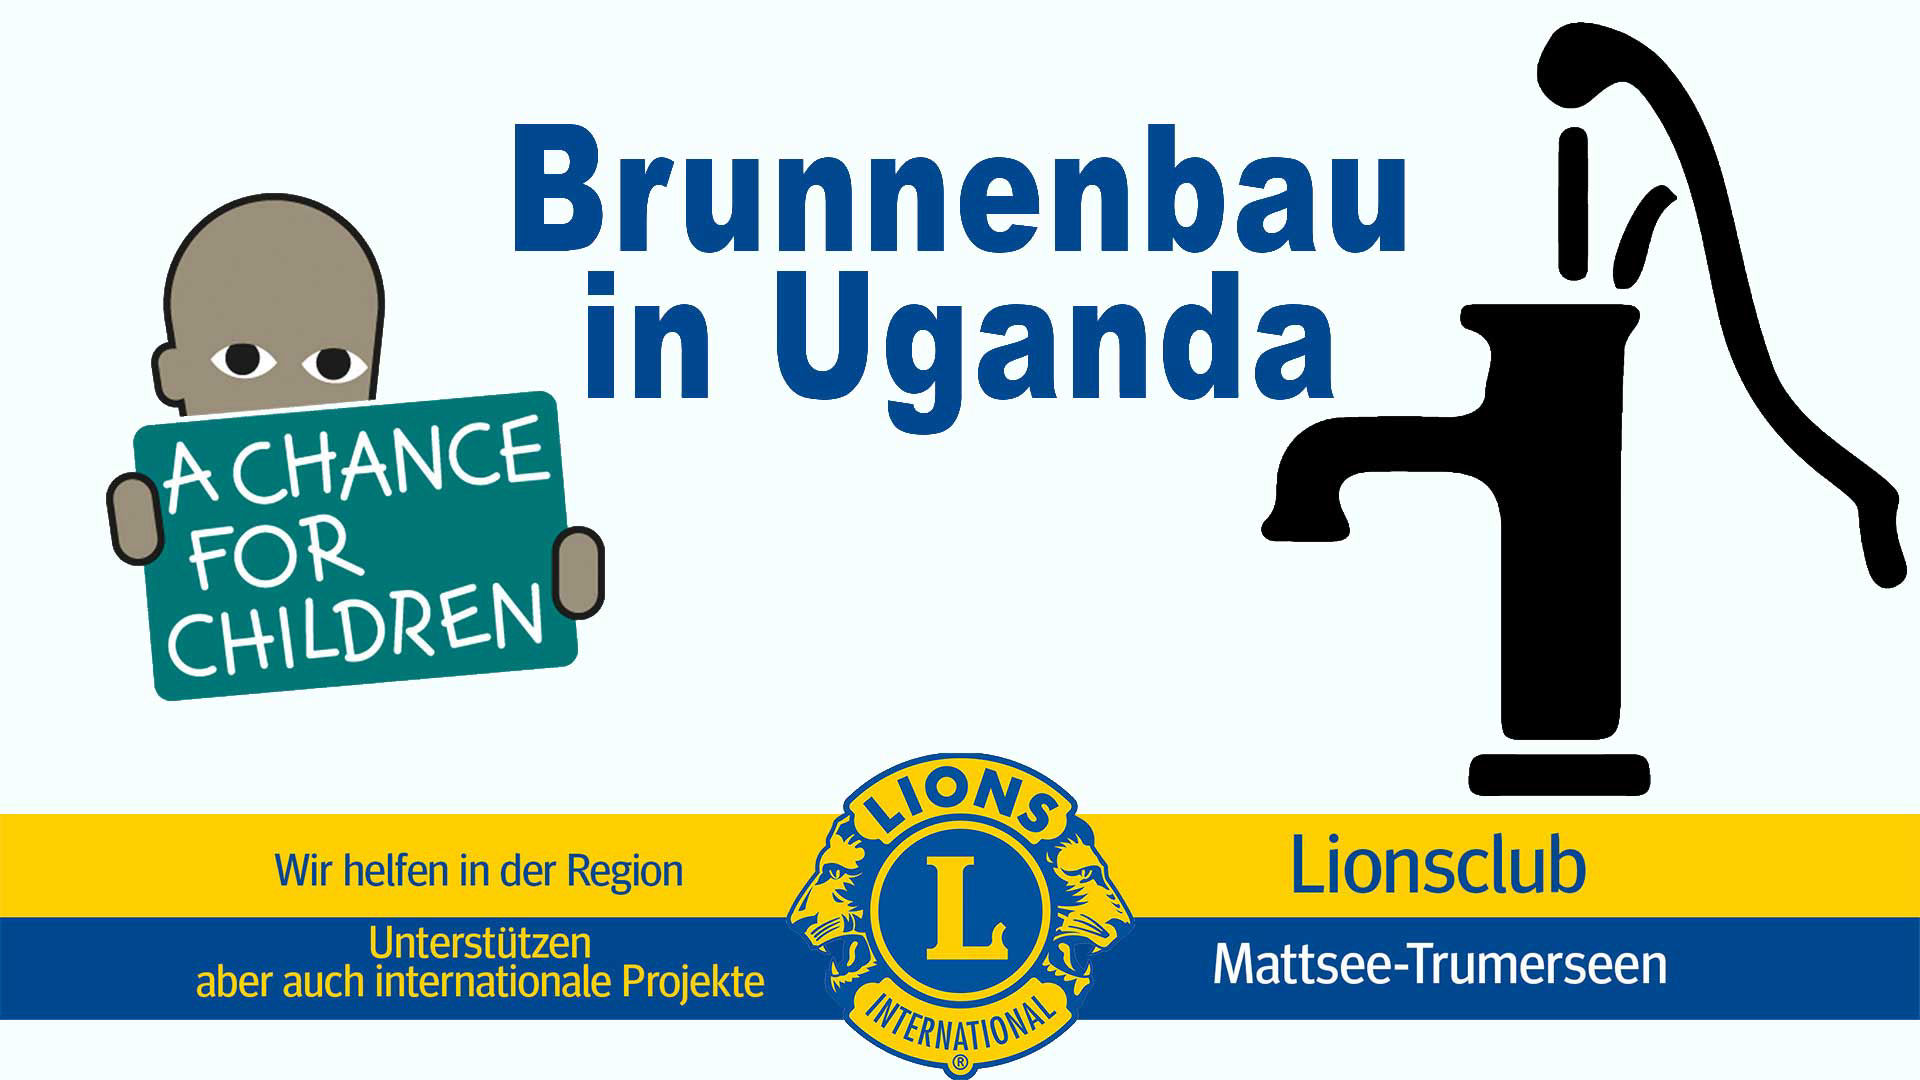 Lionsclub Mattsee-Trumerseen: Brunnenbau in Uganda